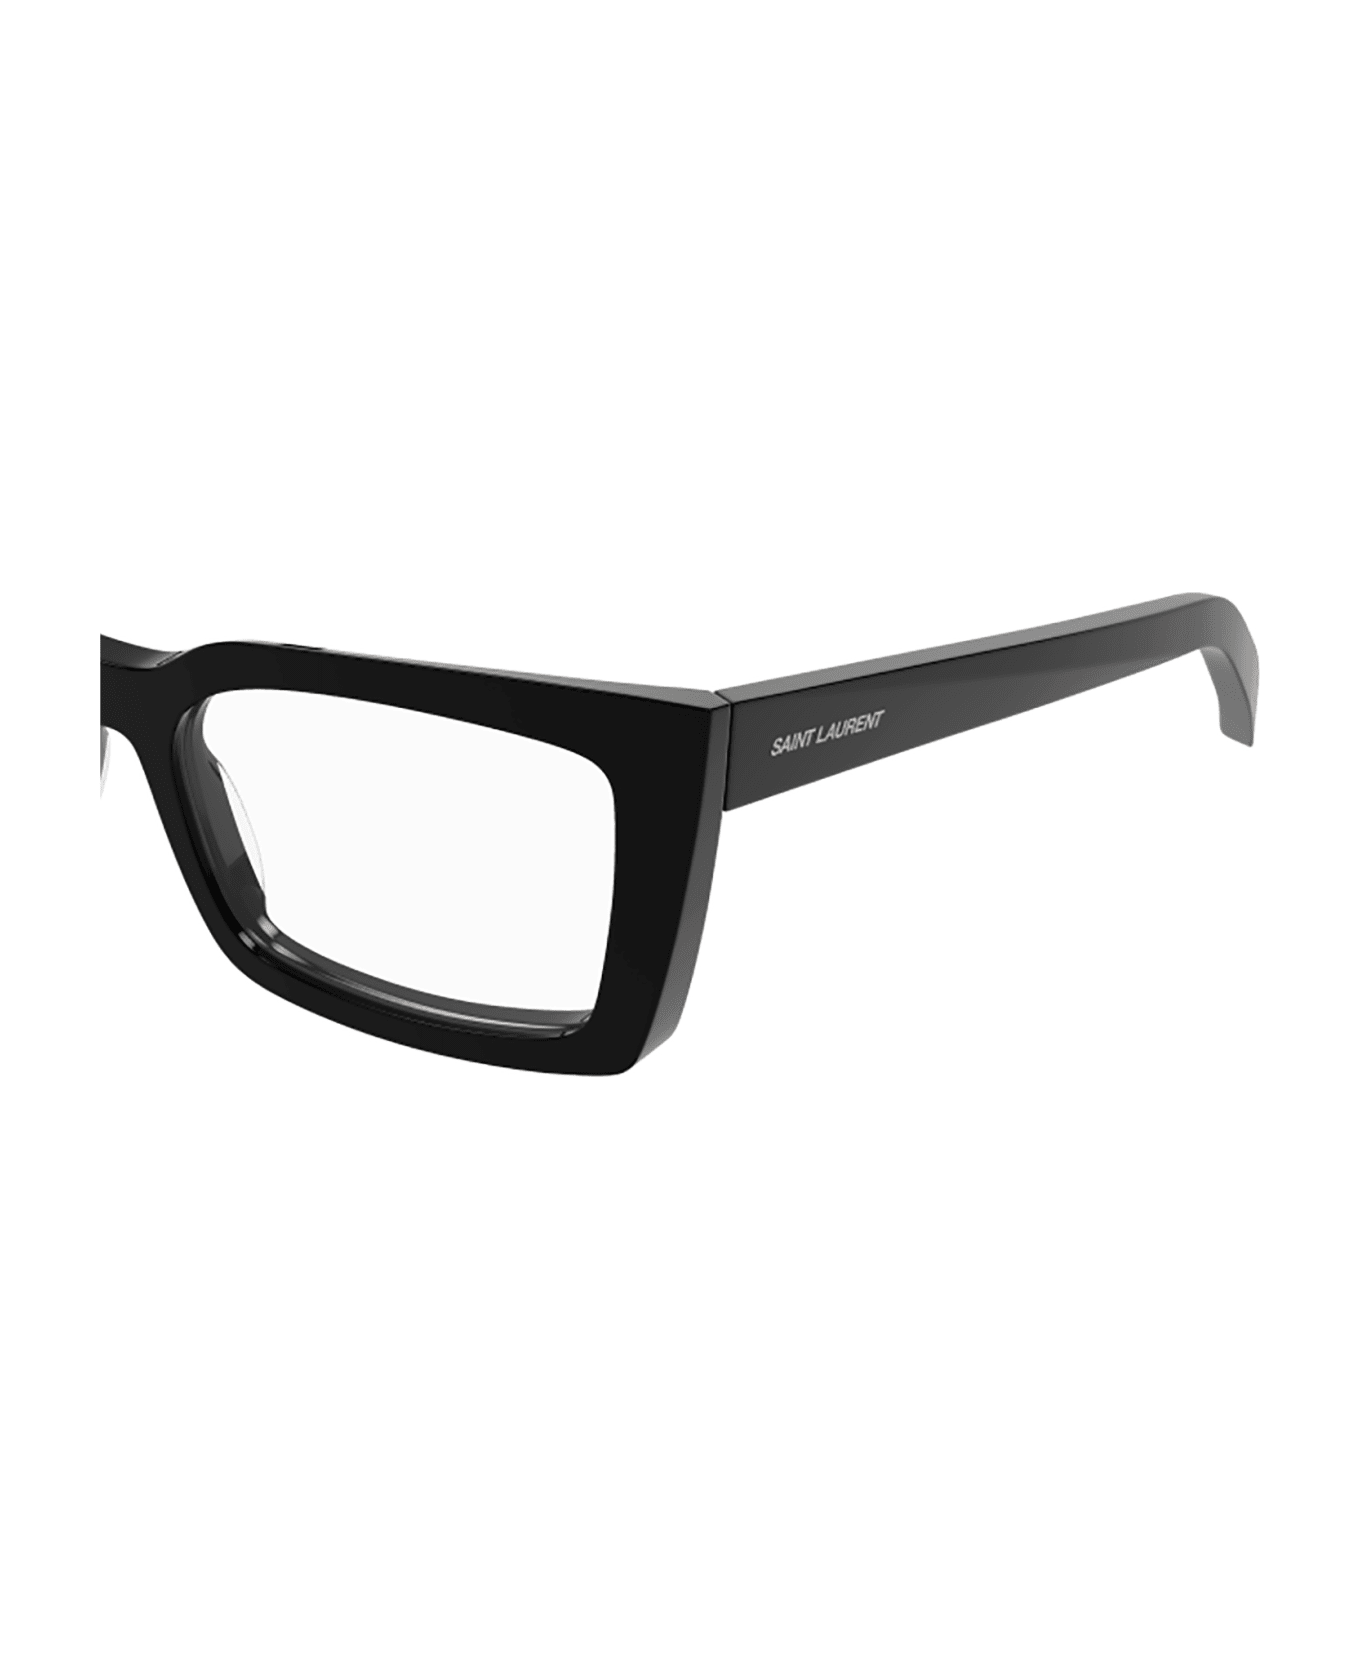 Saint Laurent Eyewear Sl 554 Eyewear - 001 black black transpare